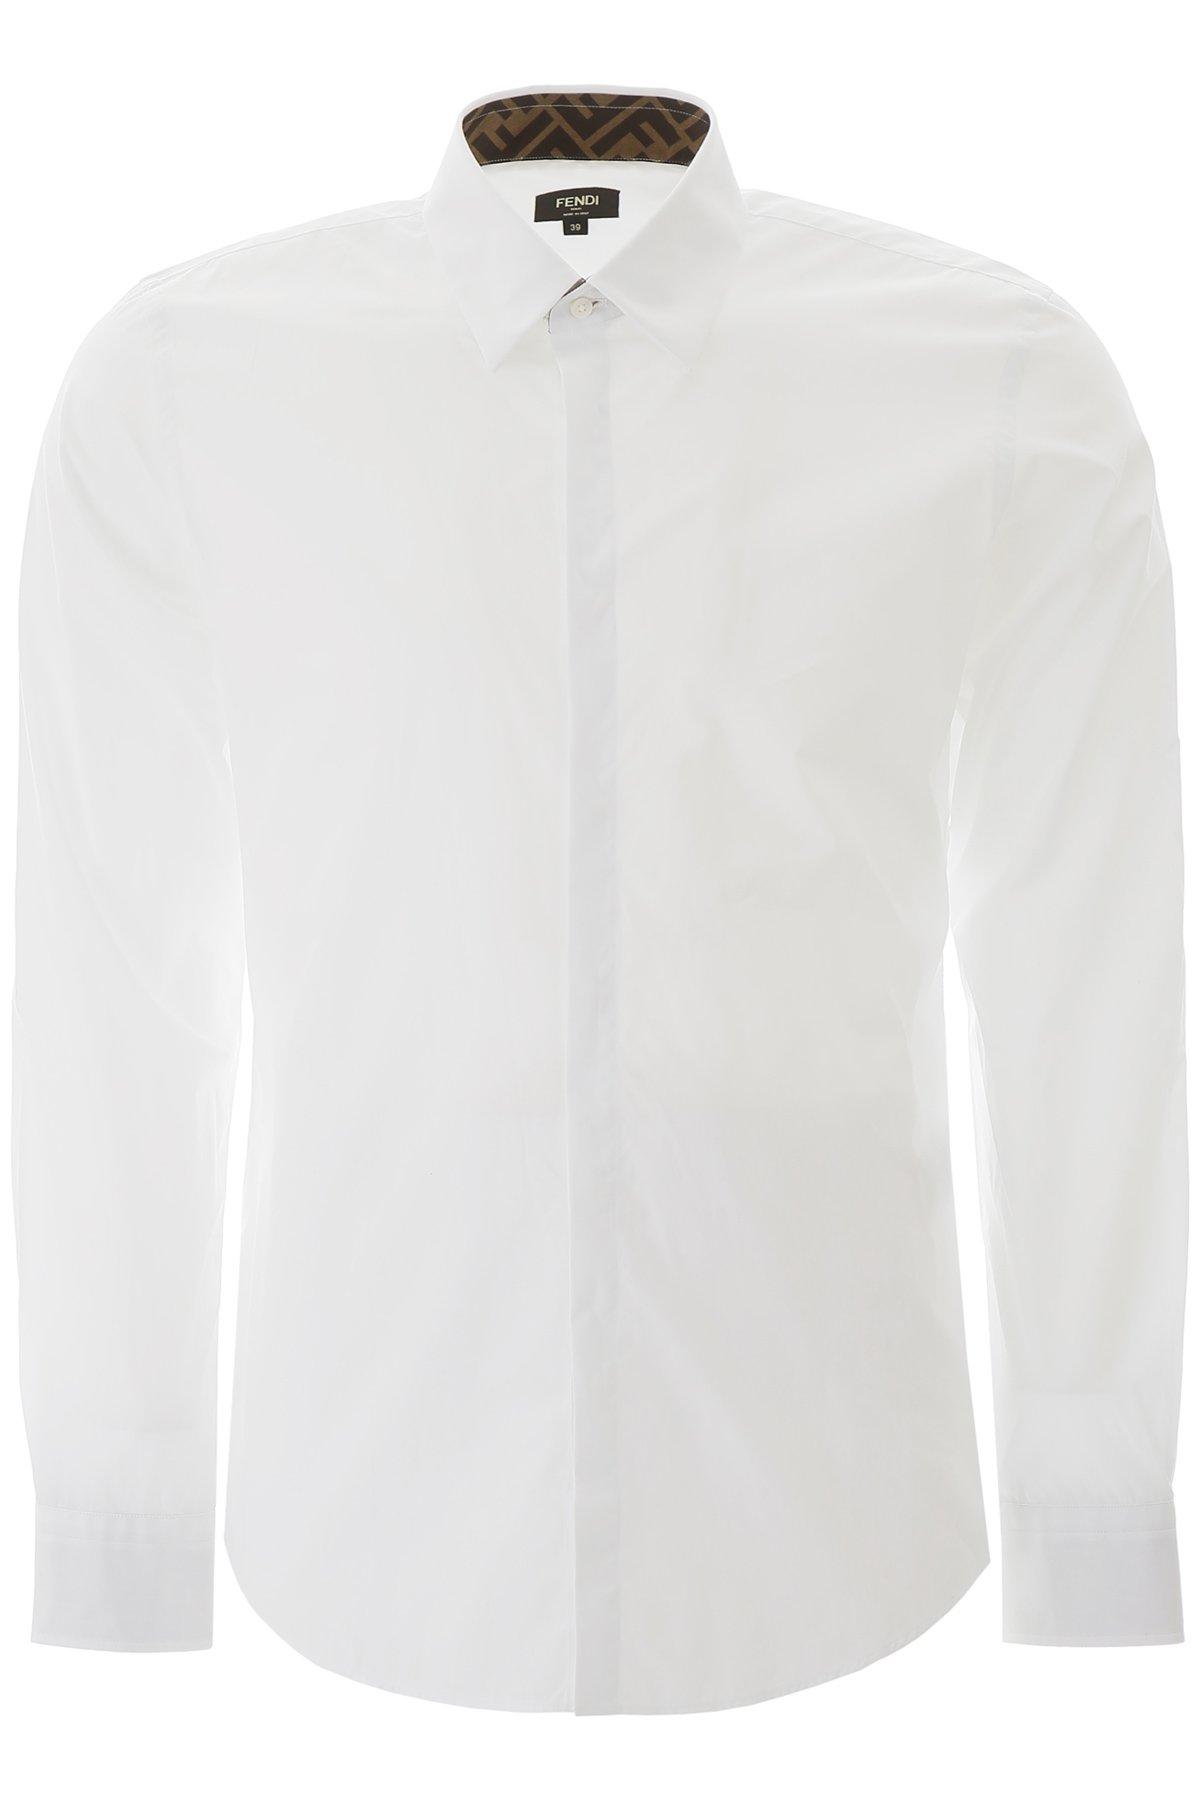 Fendi Shirt With Silk Ff Logo in White for Men - Lyst